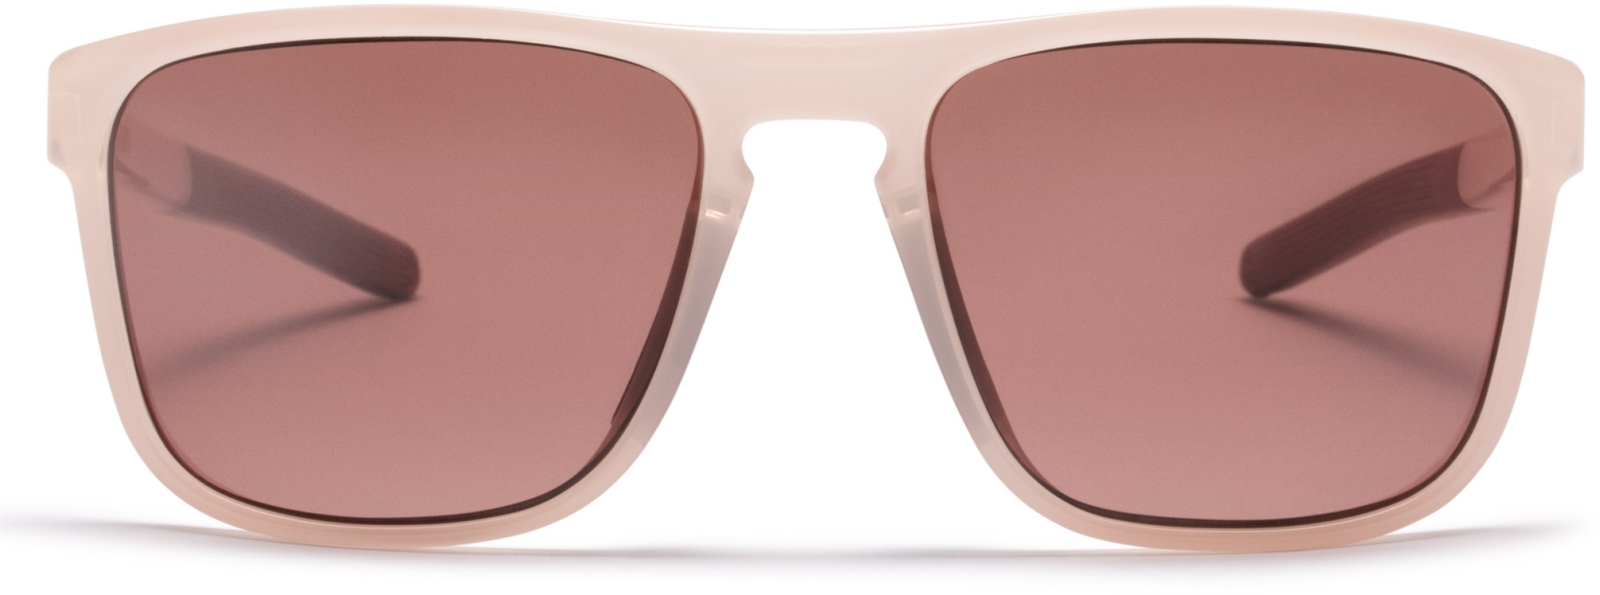 E-shop Rapha Classic Sunglasses - Rose Brown/Light Peach uni